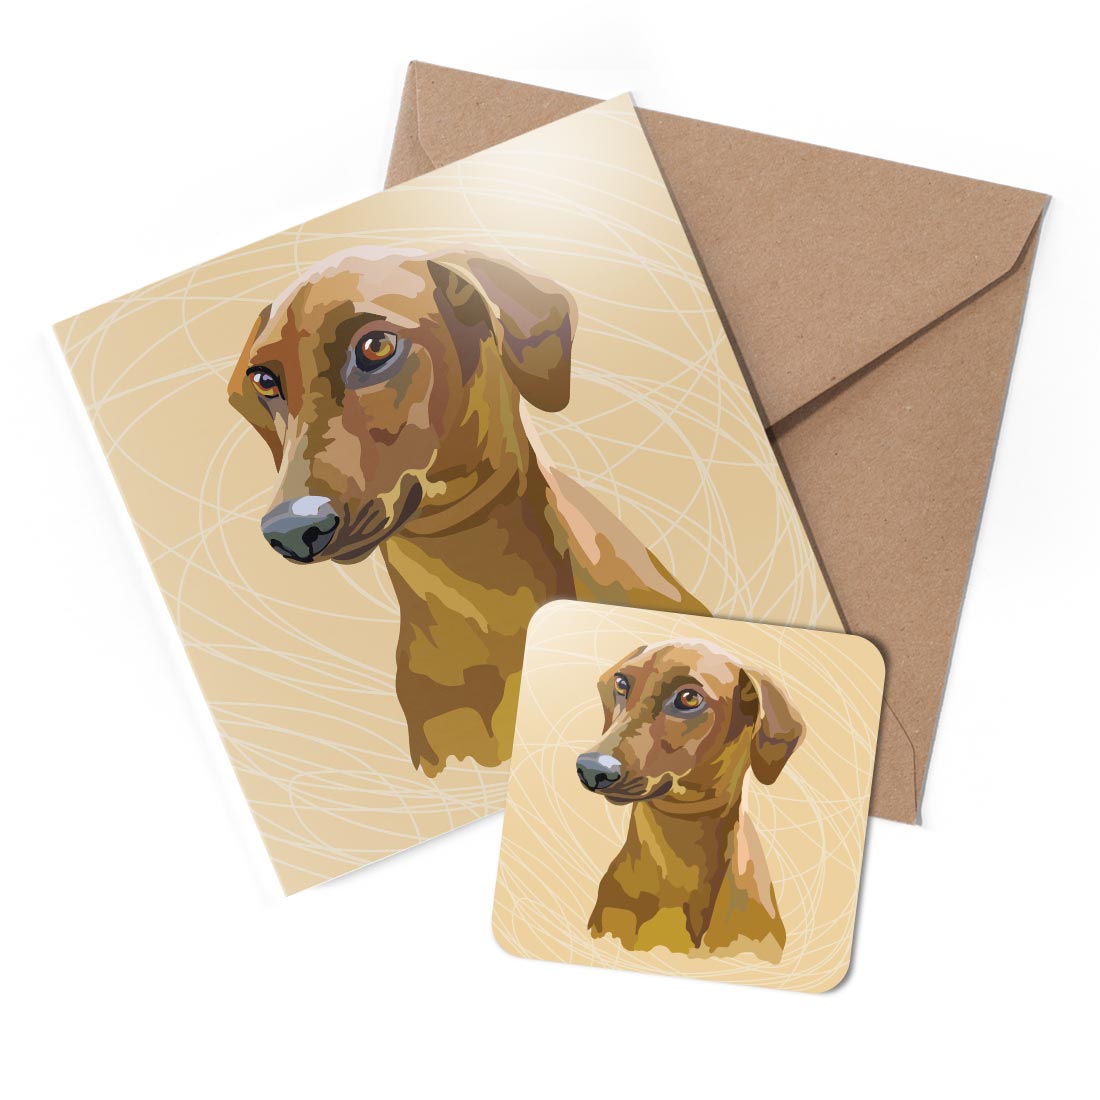 1 x Greeting Card & Coaster Set - Dachshund Sausage Dog Animal #59574